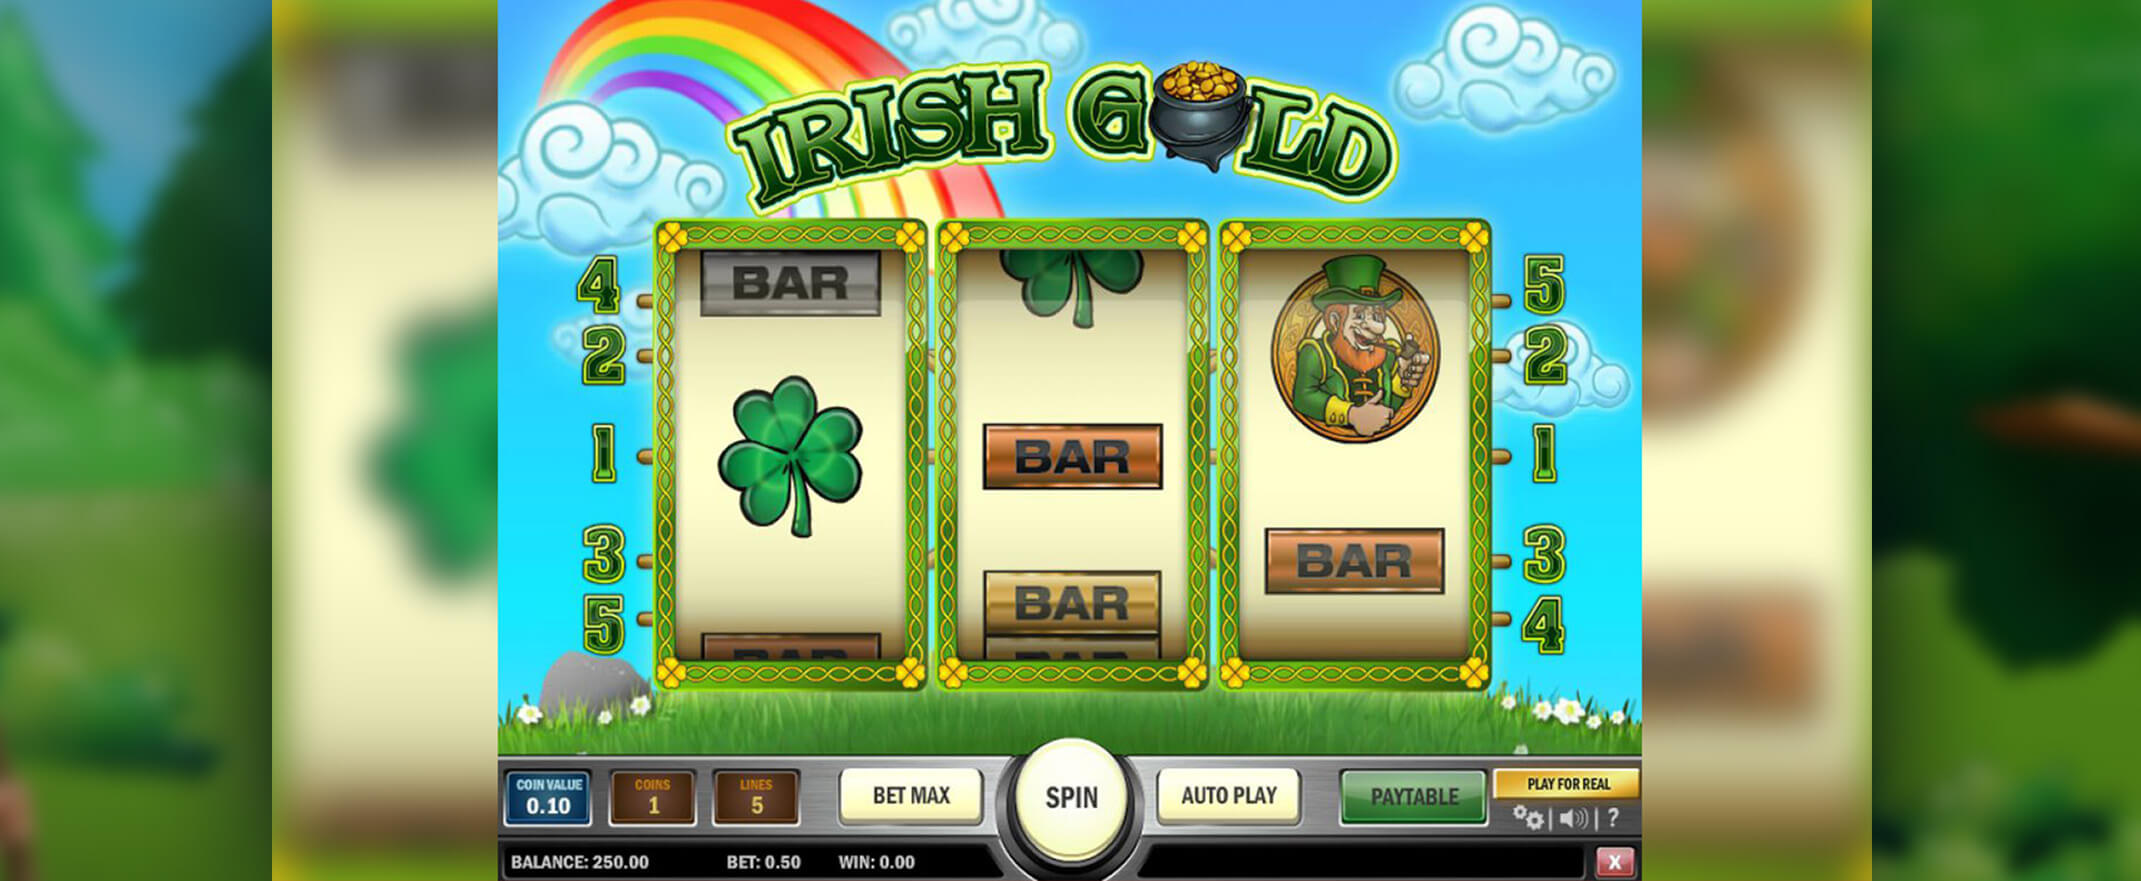 Irish Gold slot - image of the reels